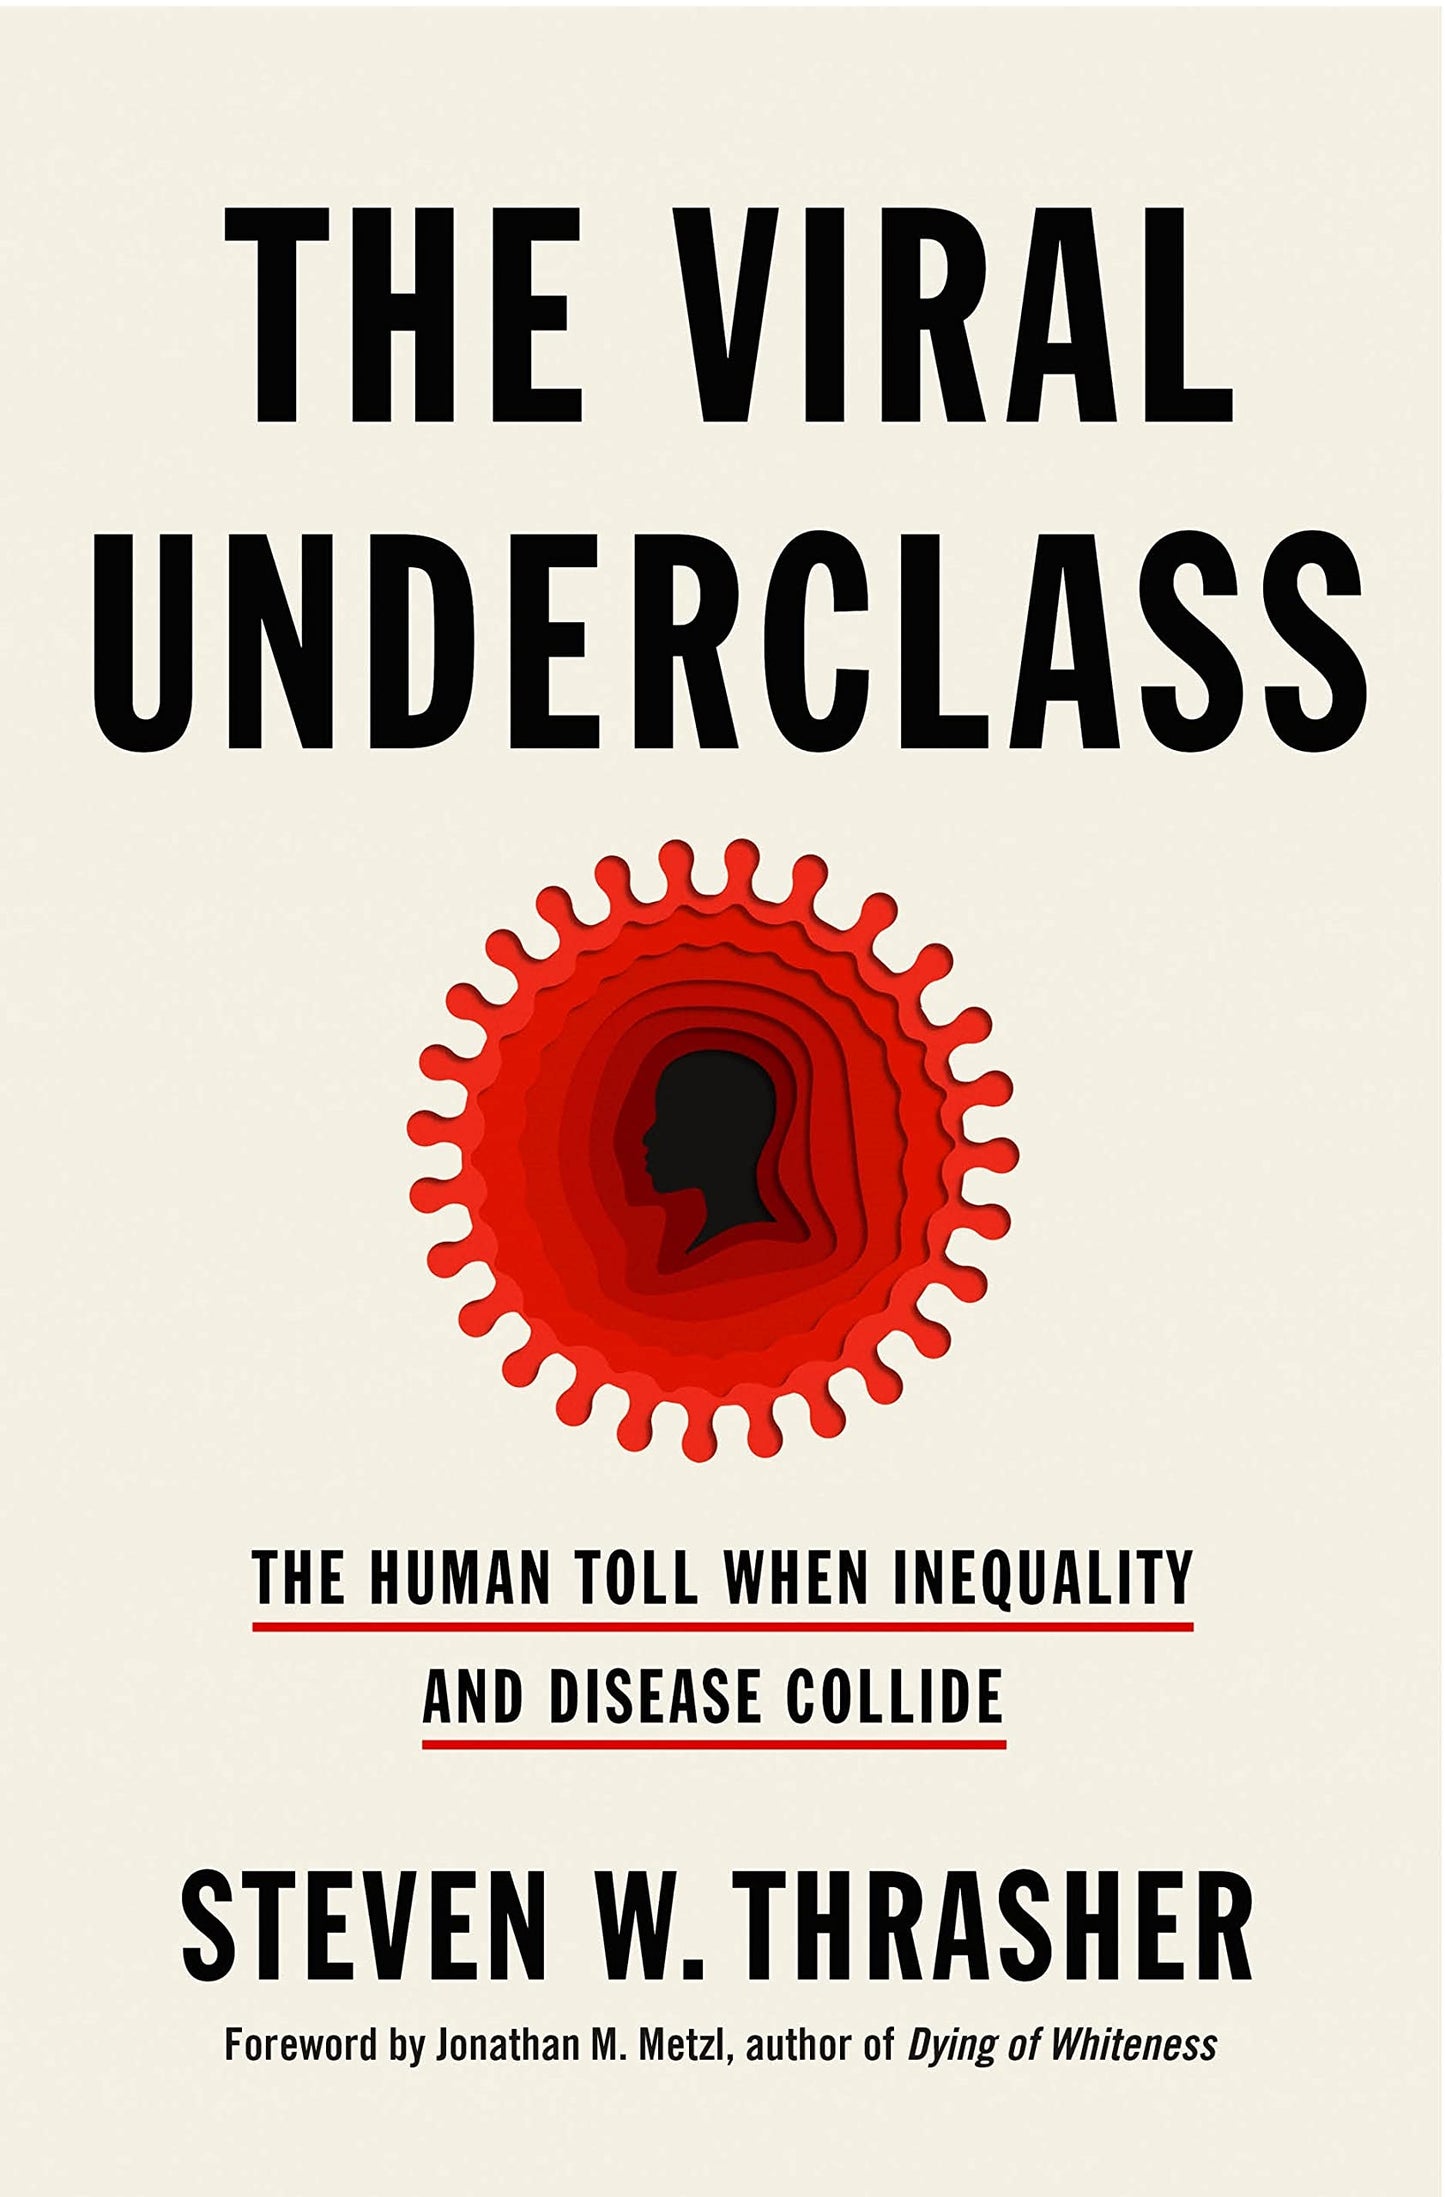 The Viral Underclass, by Steven W. Thrasher